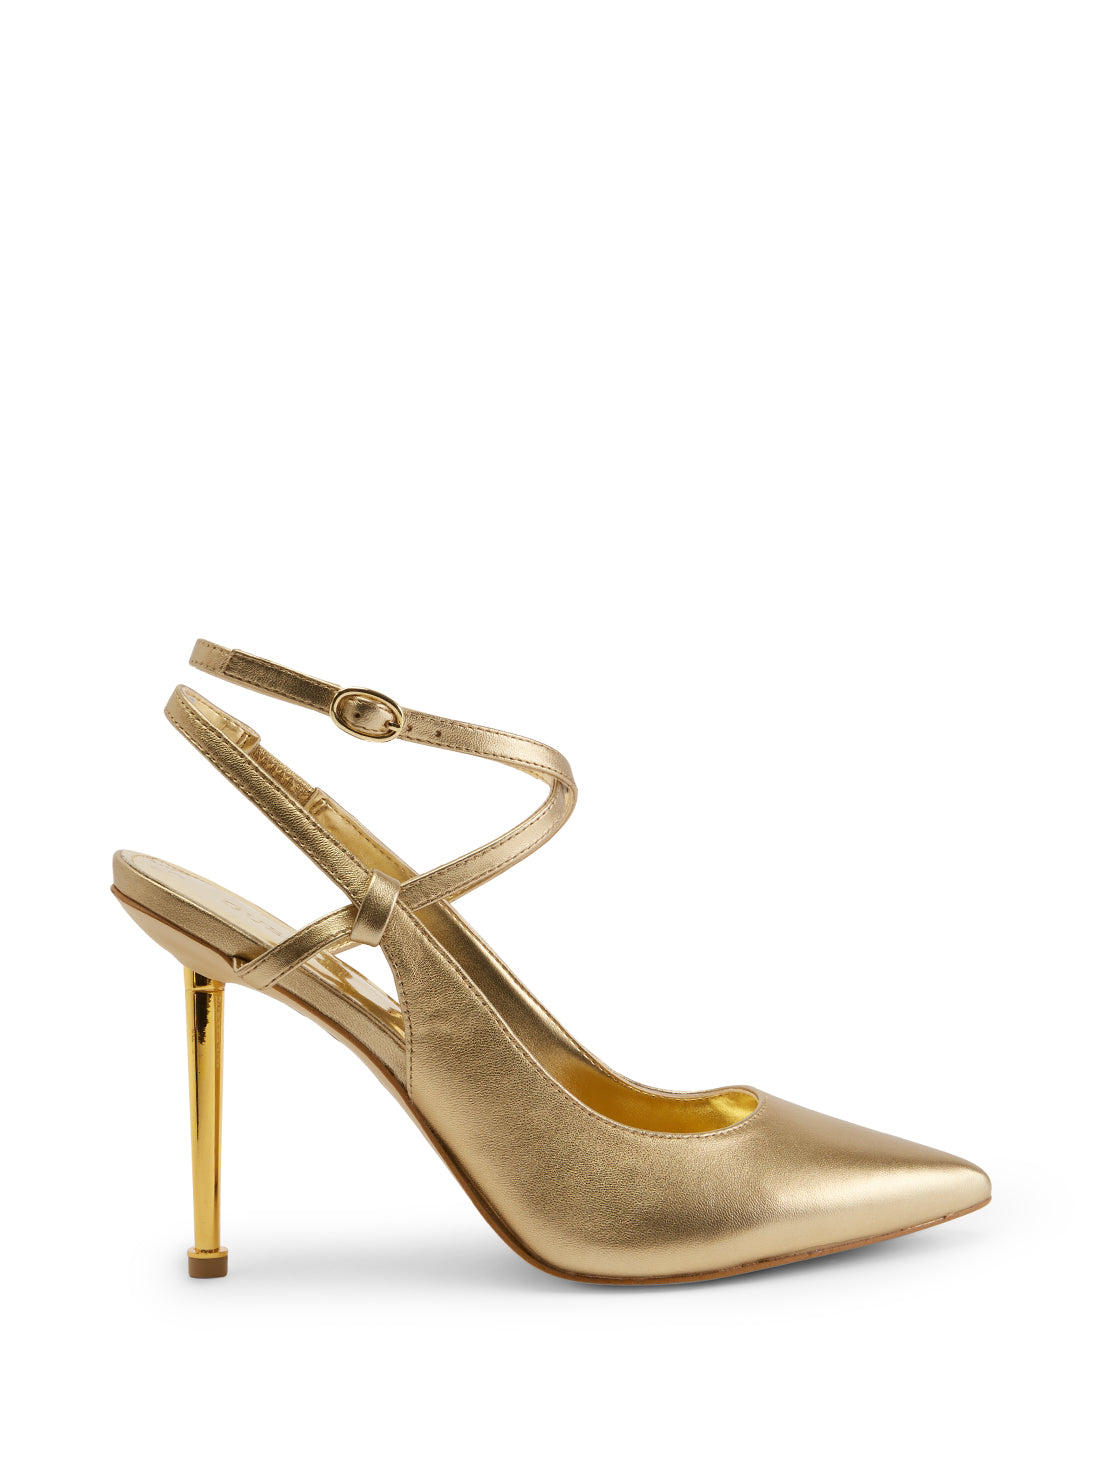 GUESS Women's Gold Staton Metallic High Heels STATON Side View